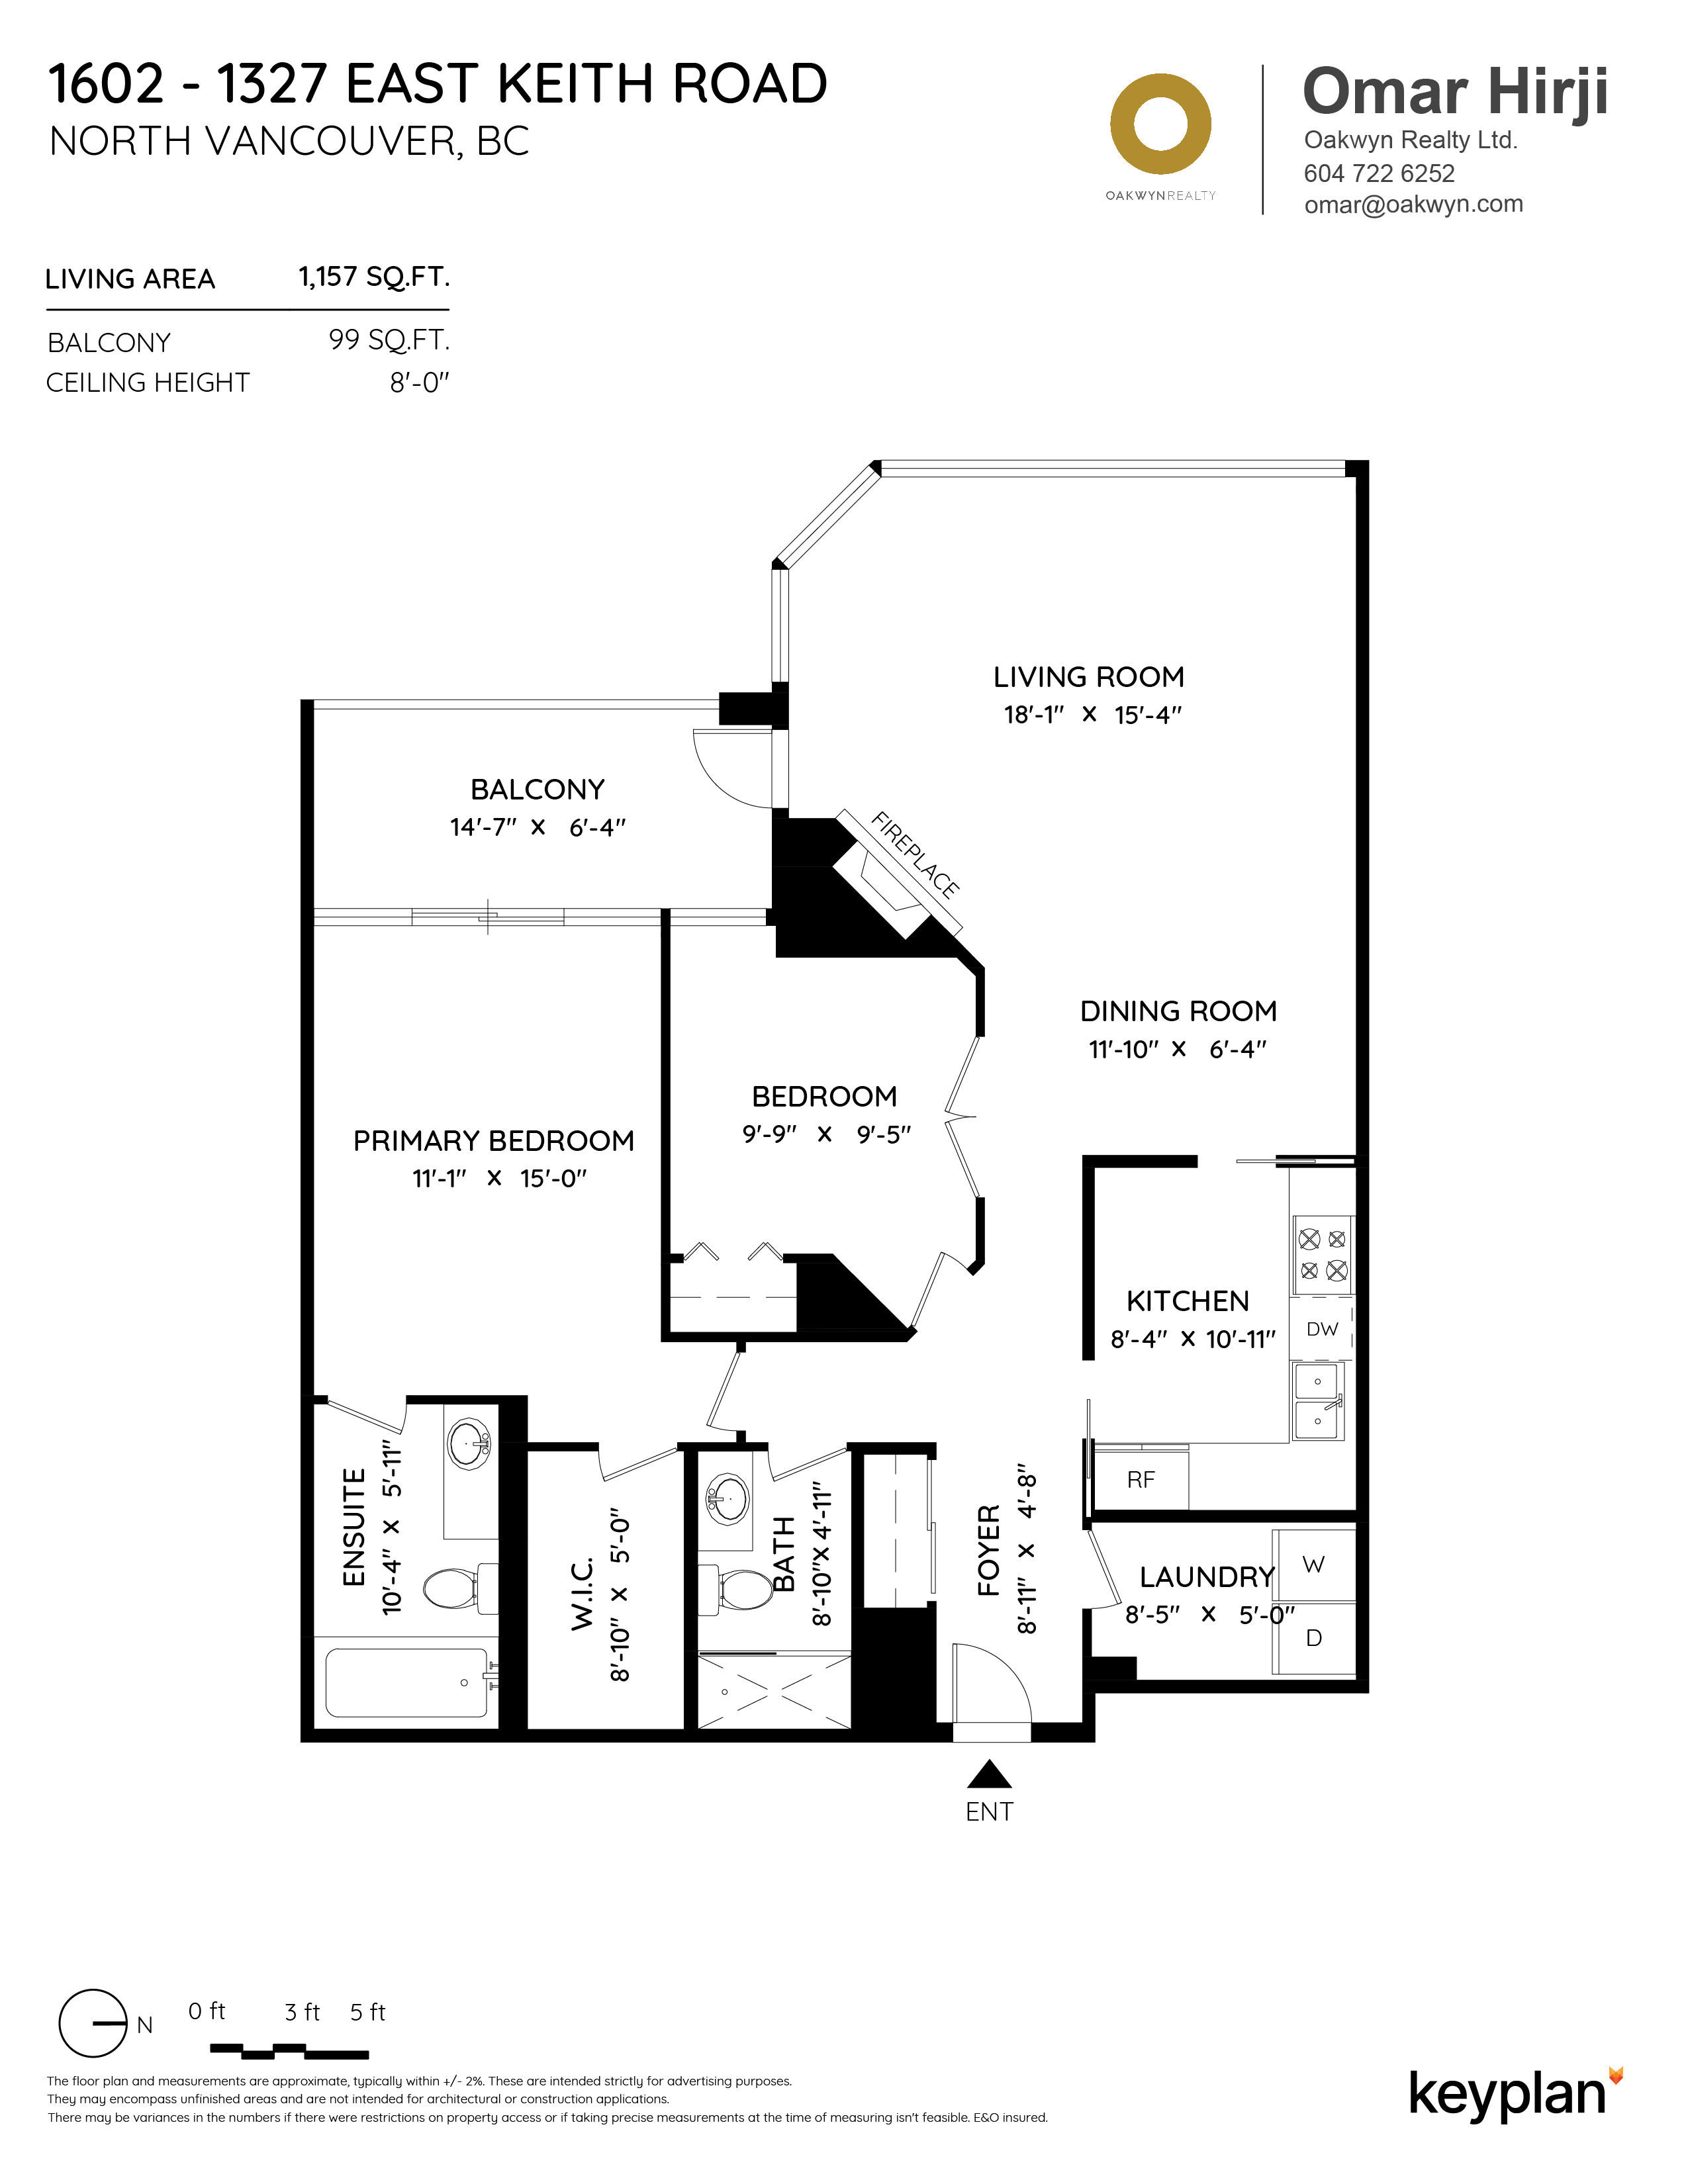 Omar Hirji - Unit 1602 - 1327 East Keith Road, North Vancouver, BC, Canada | Floor Plan 1